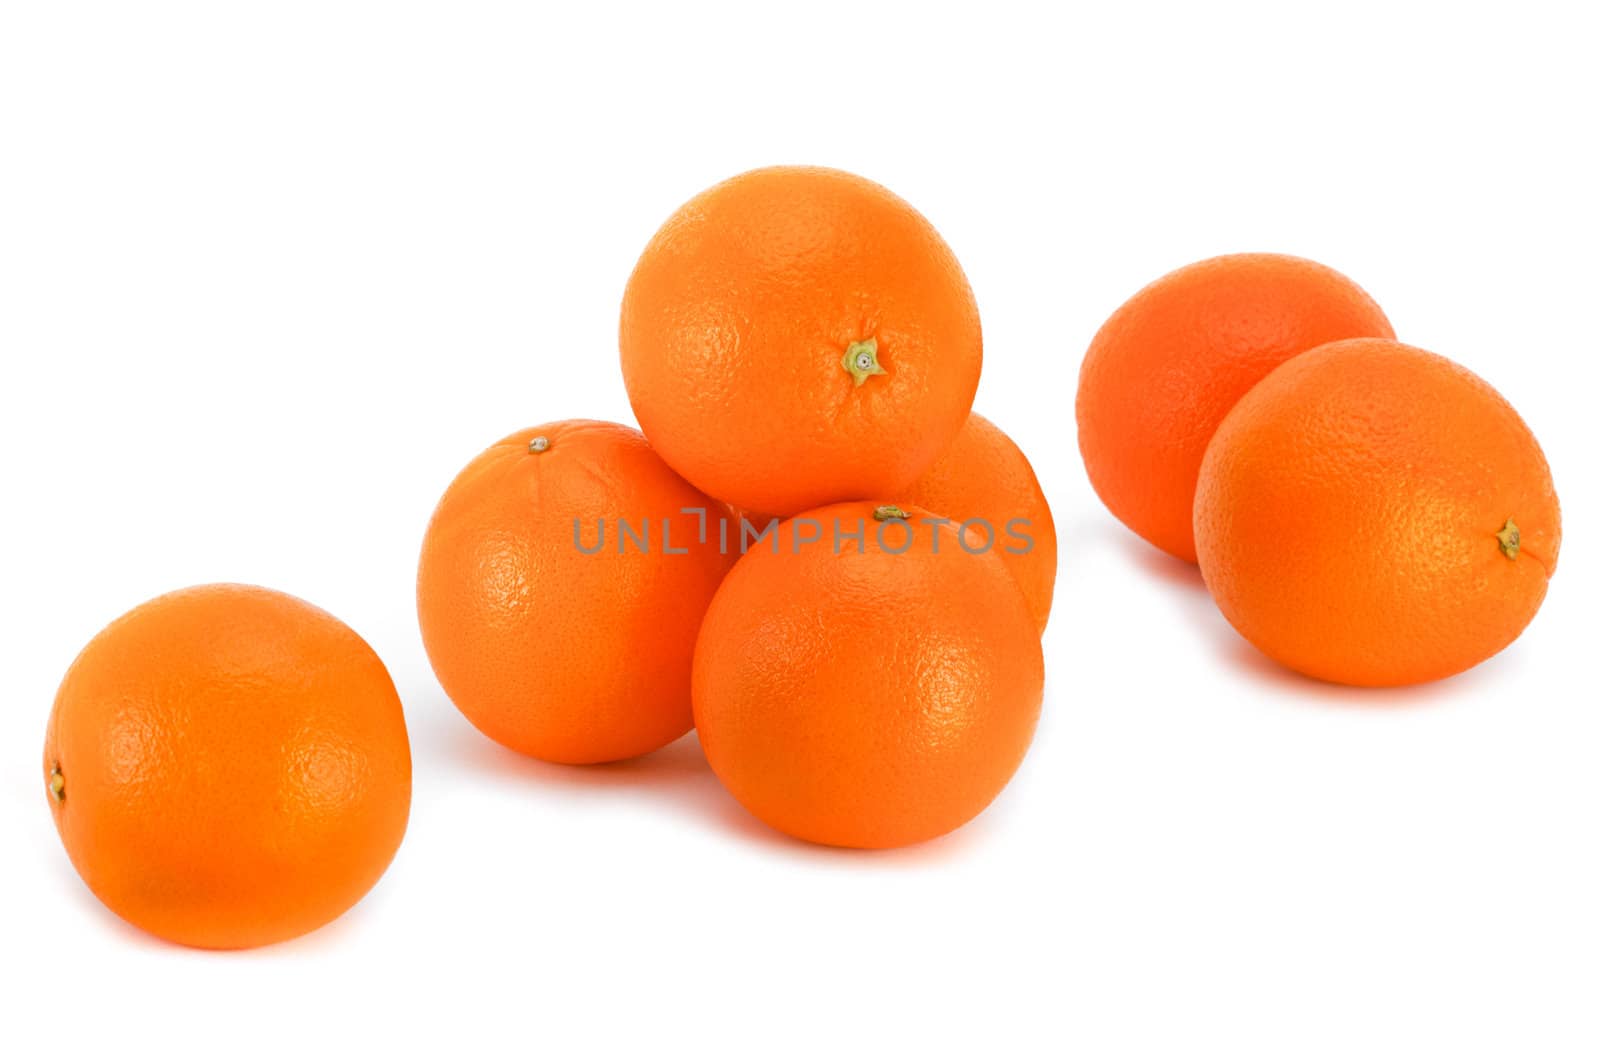 Oranges on a white background. by lobzik